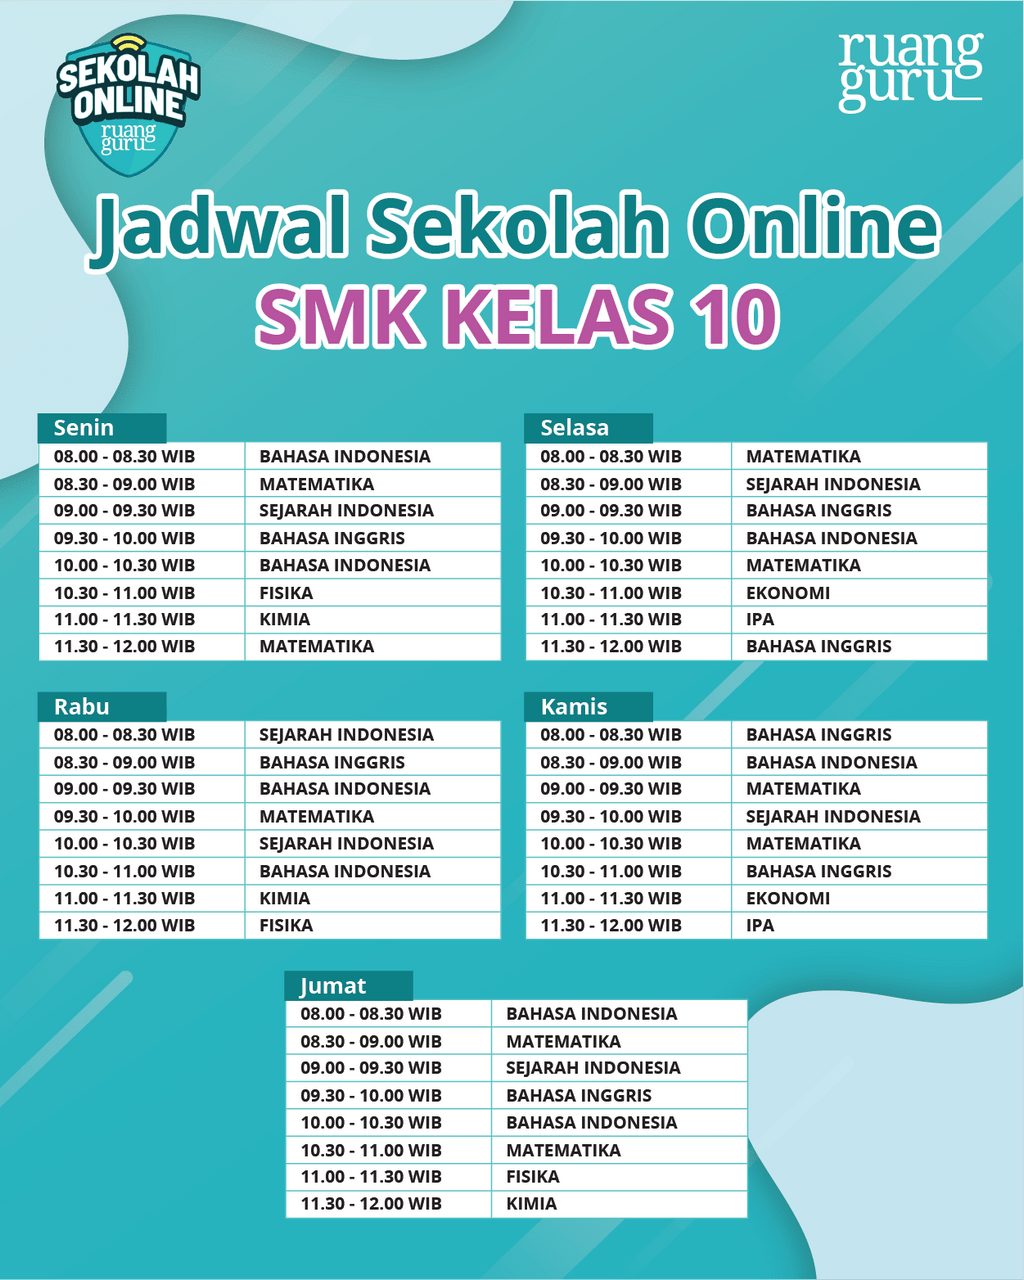 Jadwal Sekolah Online SMK